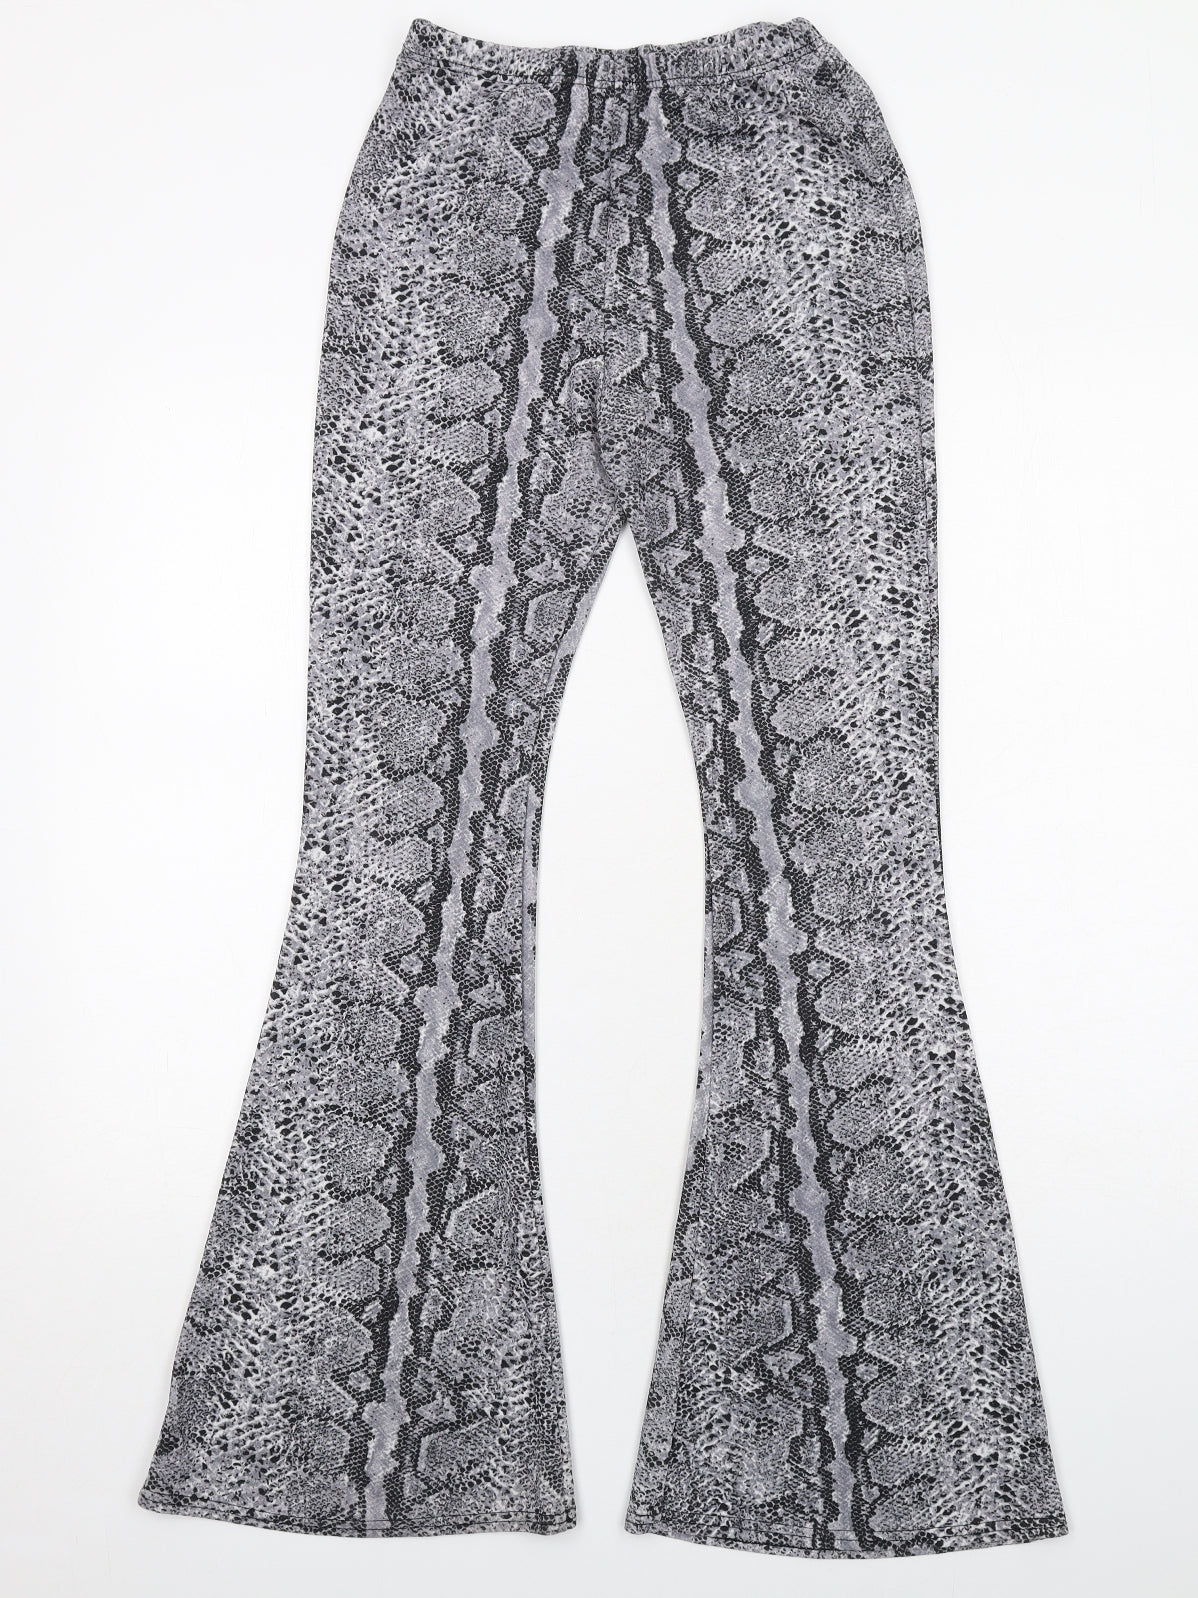 Nasty Gal Womens Grey Animal Print Polyester Trousers Size 12 Regular - Snakeskin Pattern